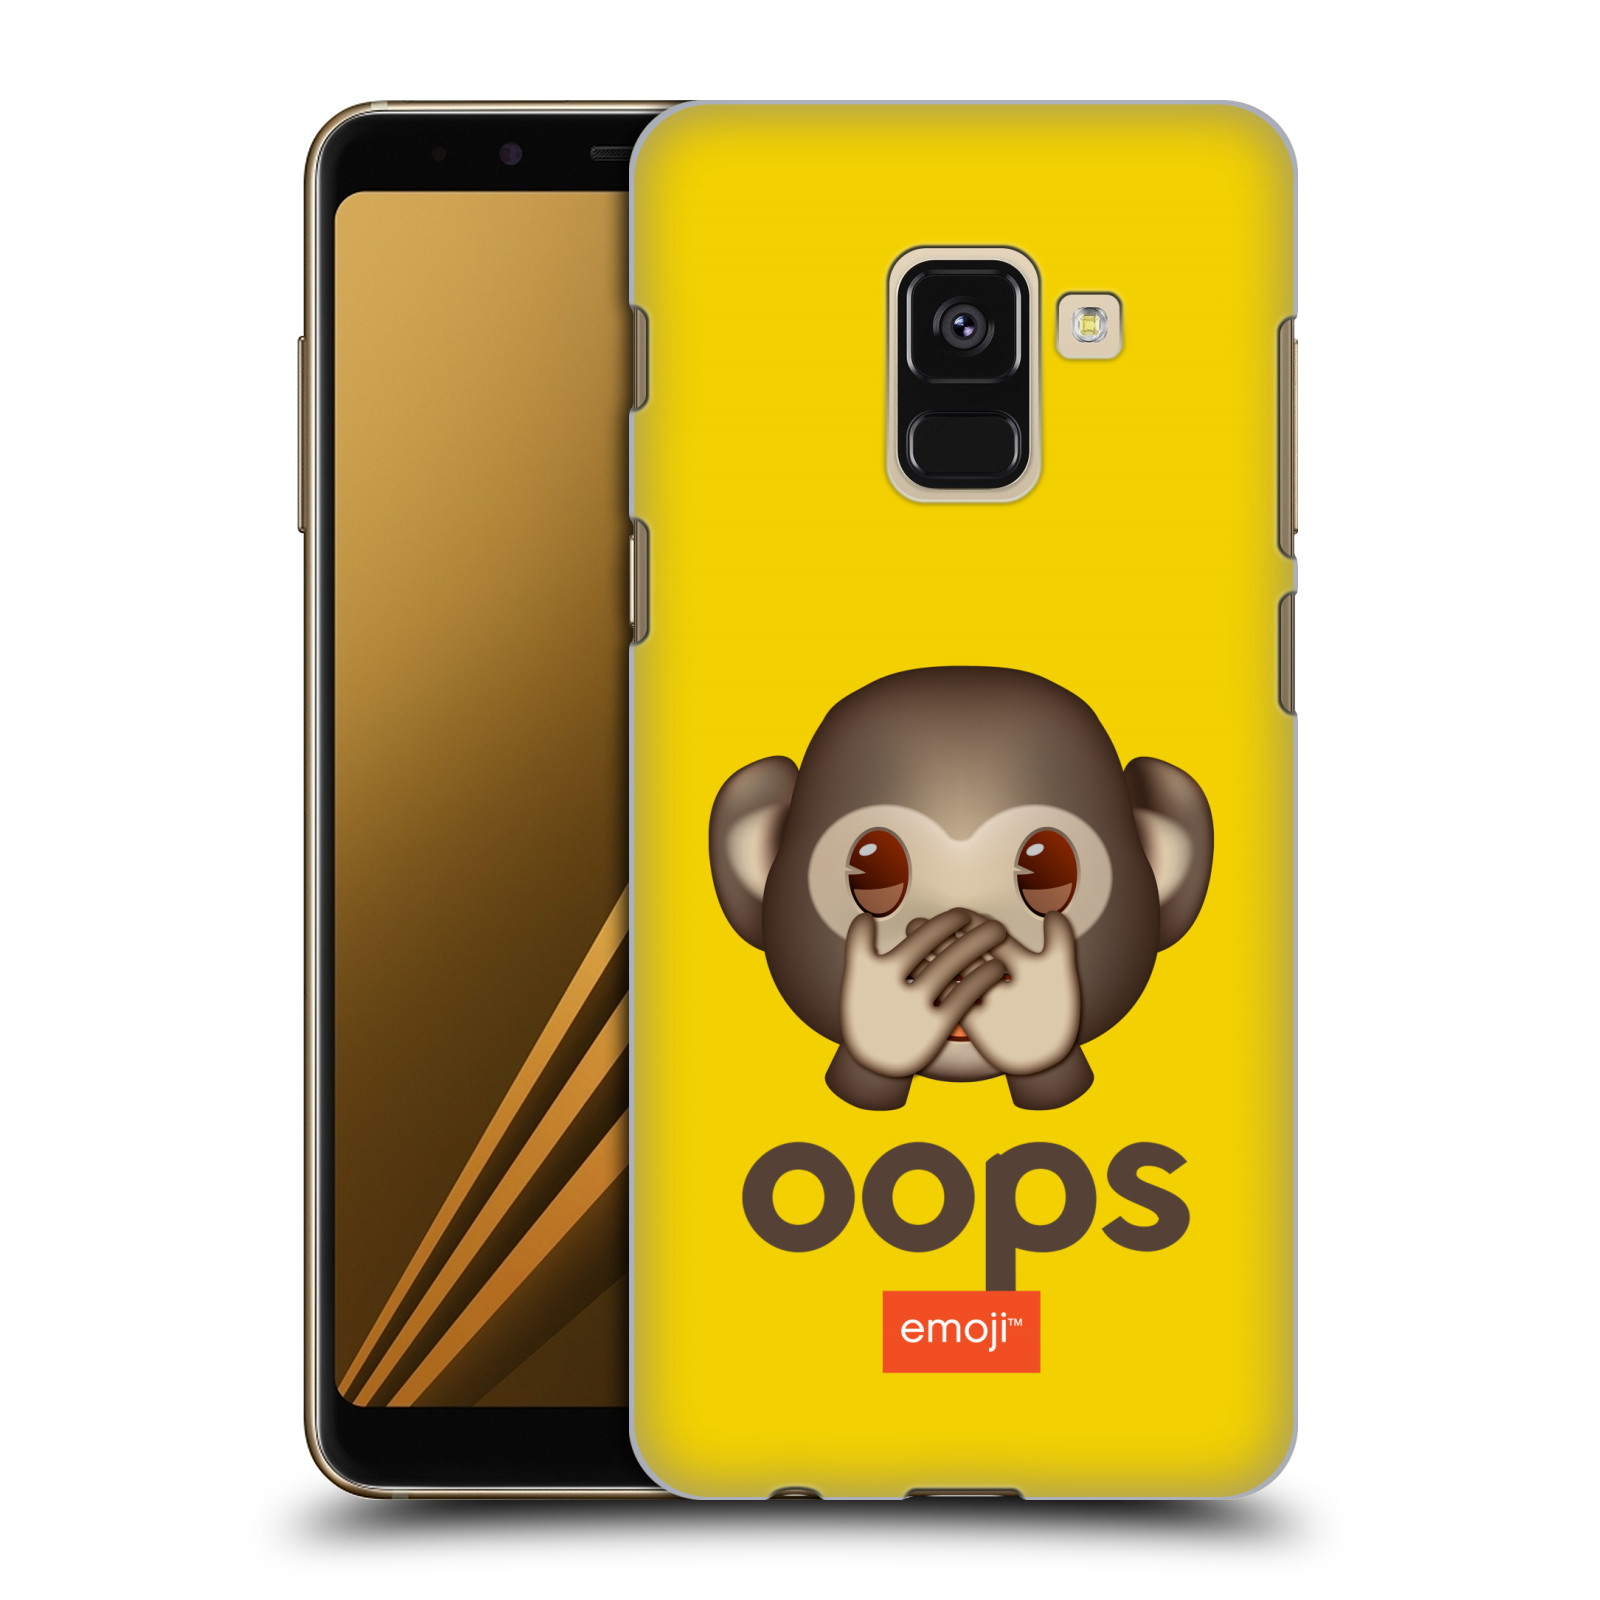 Pouzdro na mobil Samsung Galaxy A8+ 2018, A8 PLUS 2018 - HEAD CASE - Emoji opička Oops